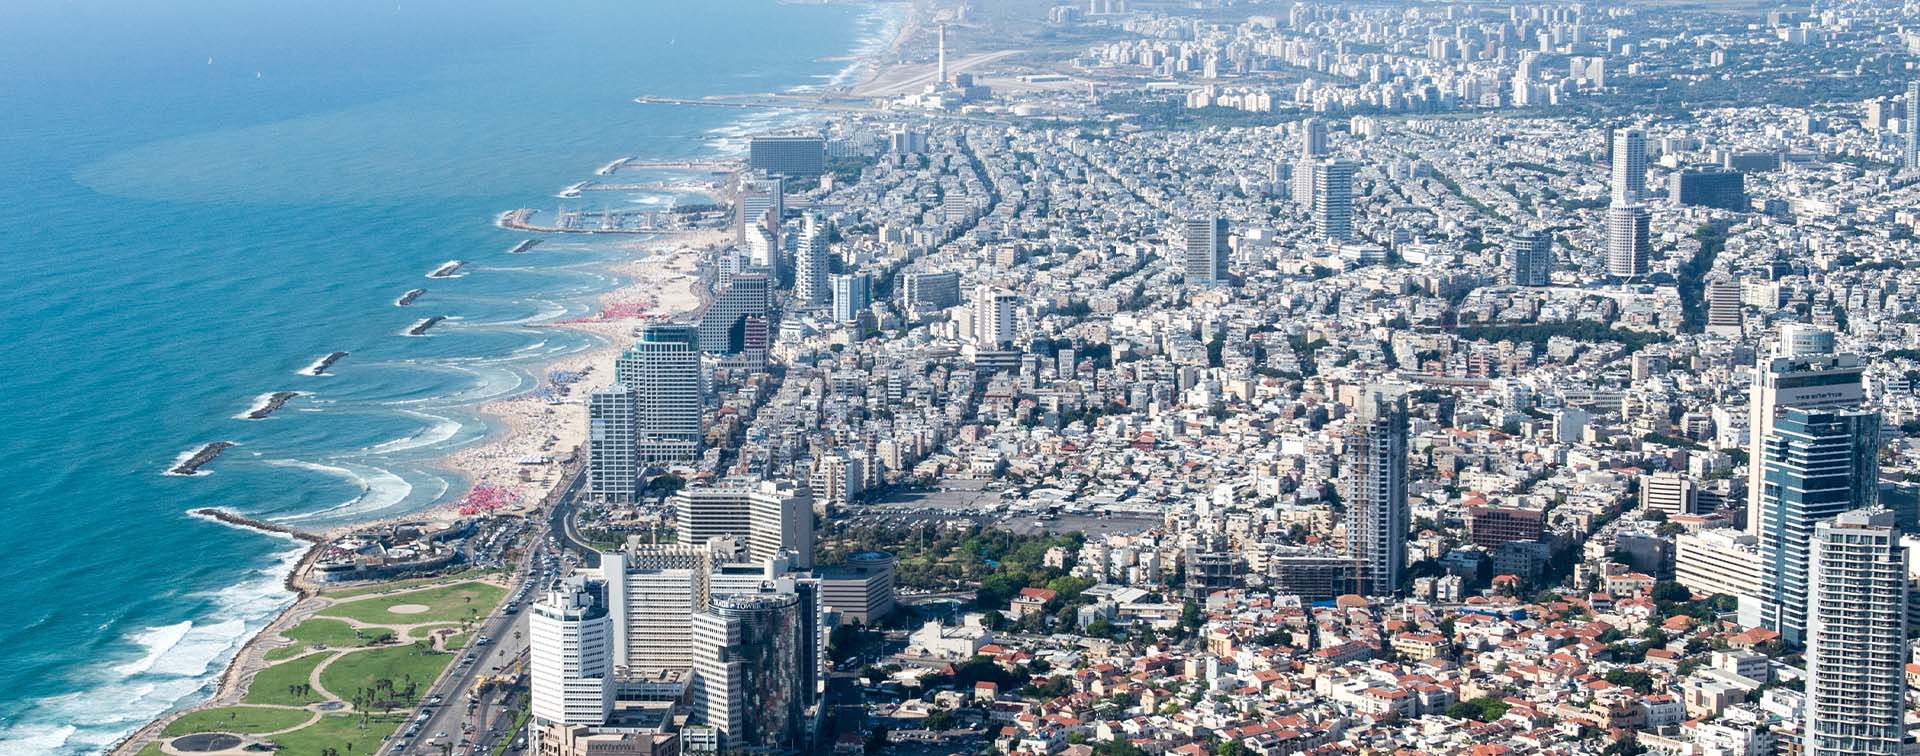 Aerial view of Tel Aviv, Israel and the coastline